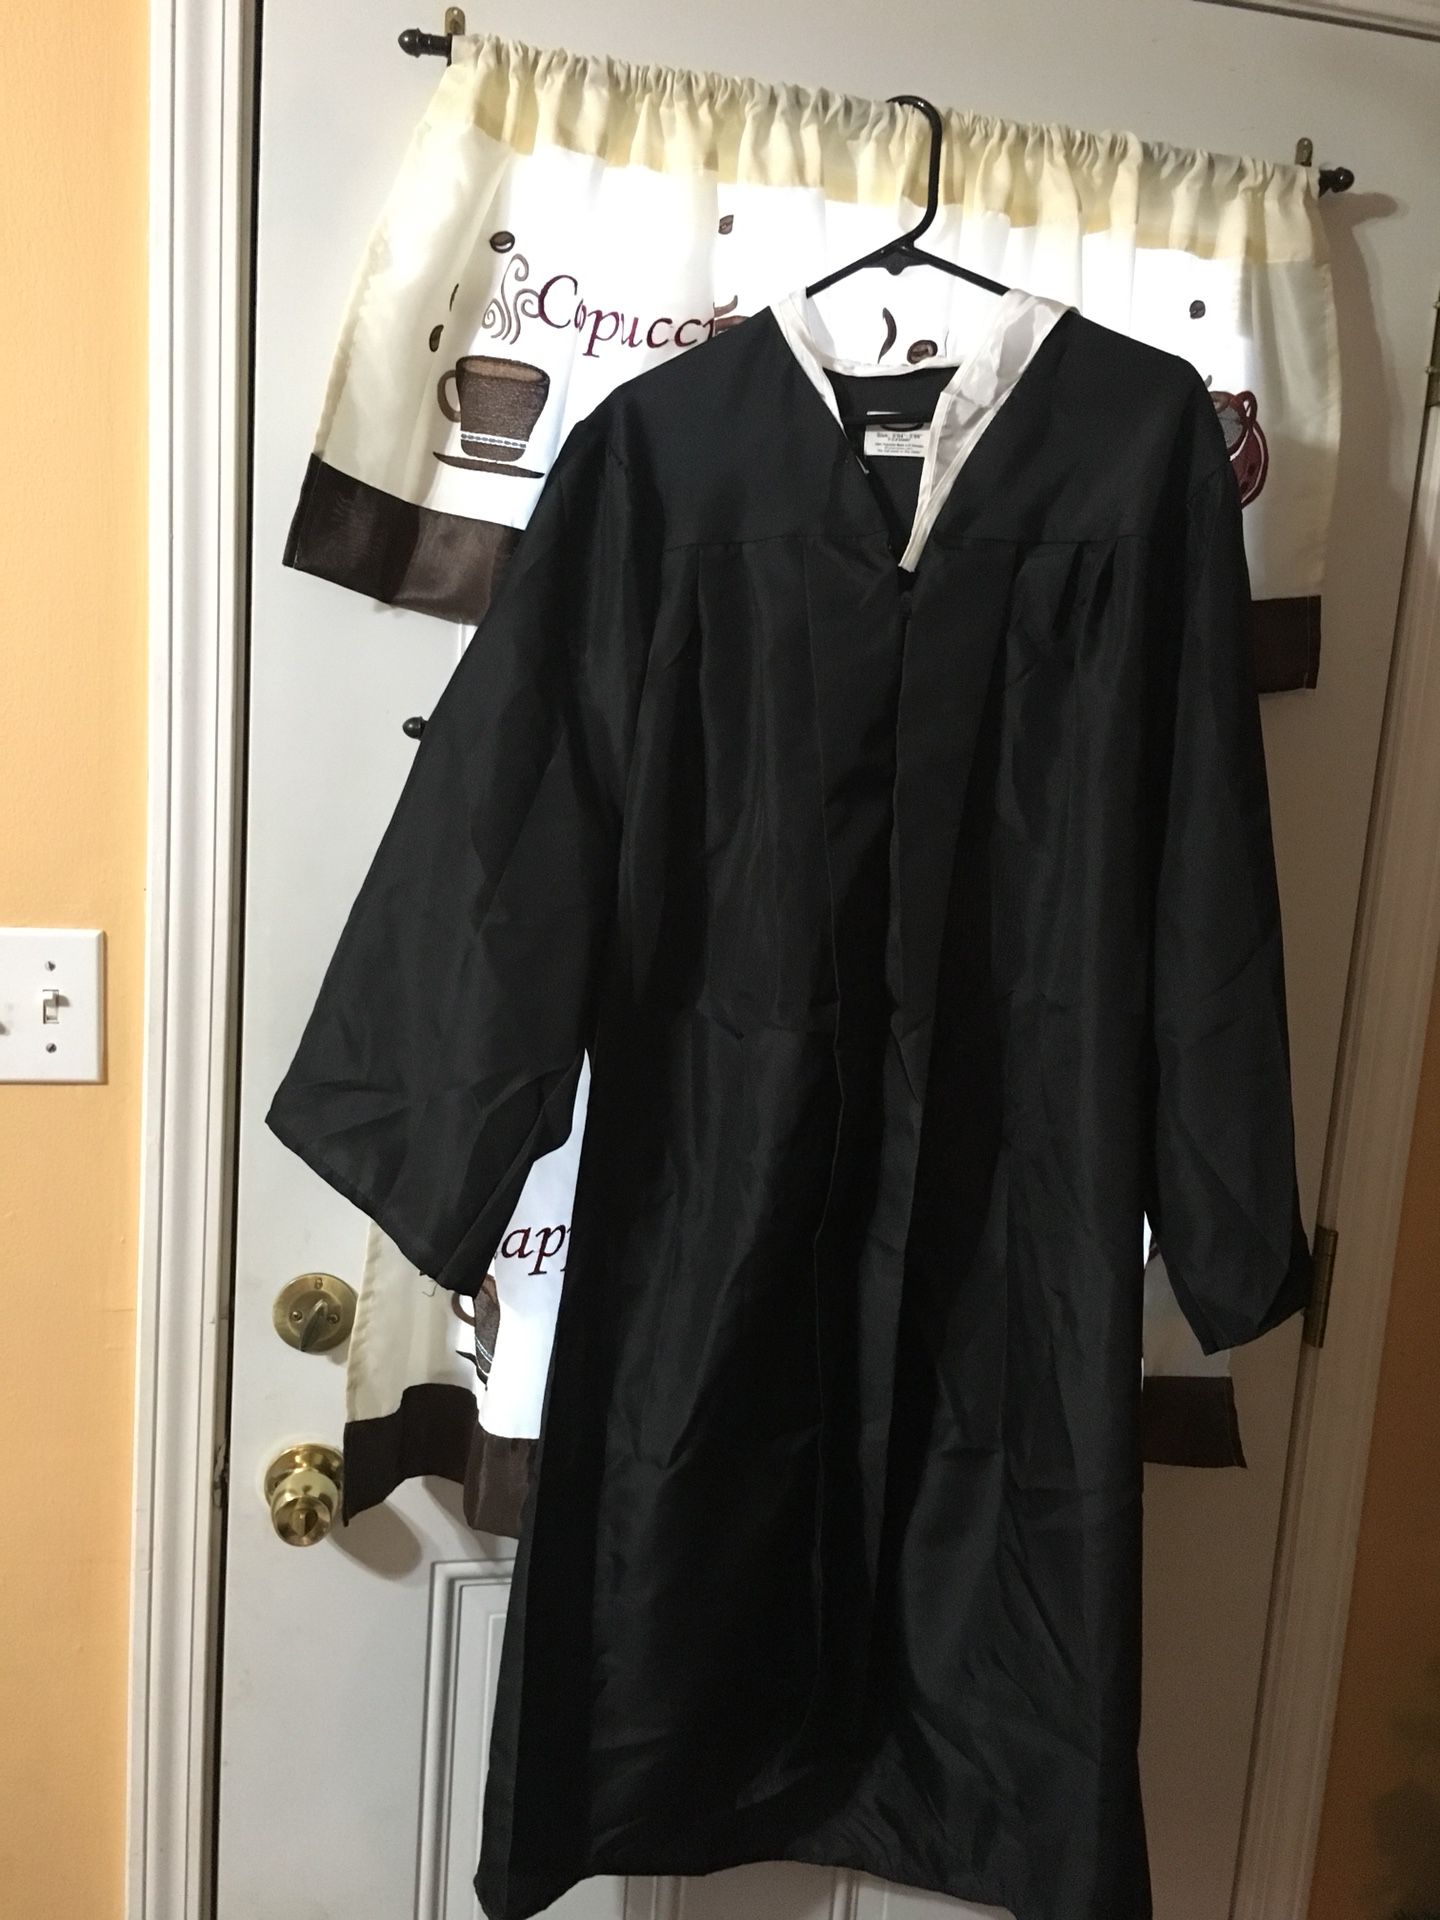 Jostens graduation gown